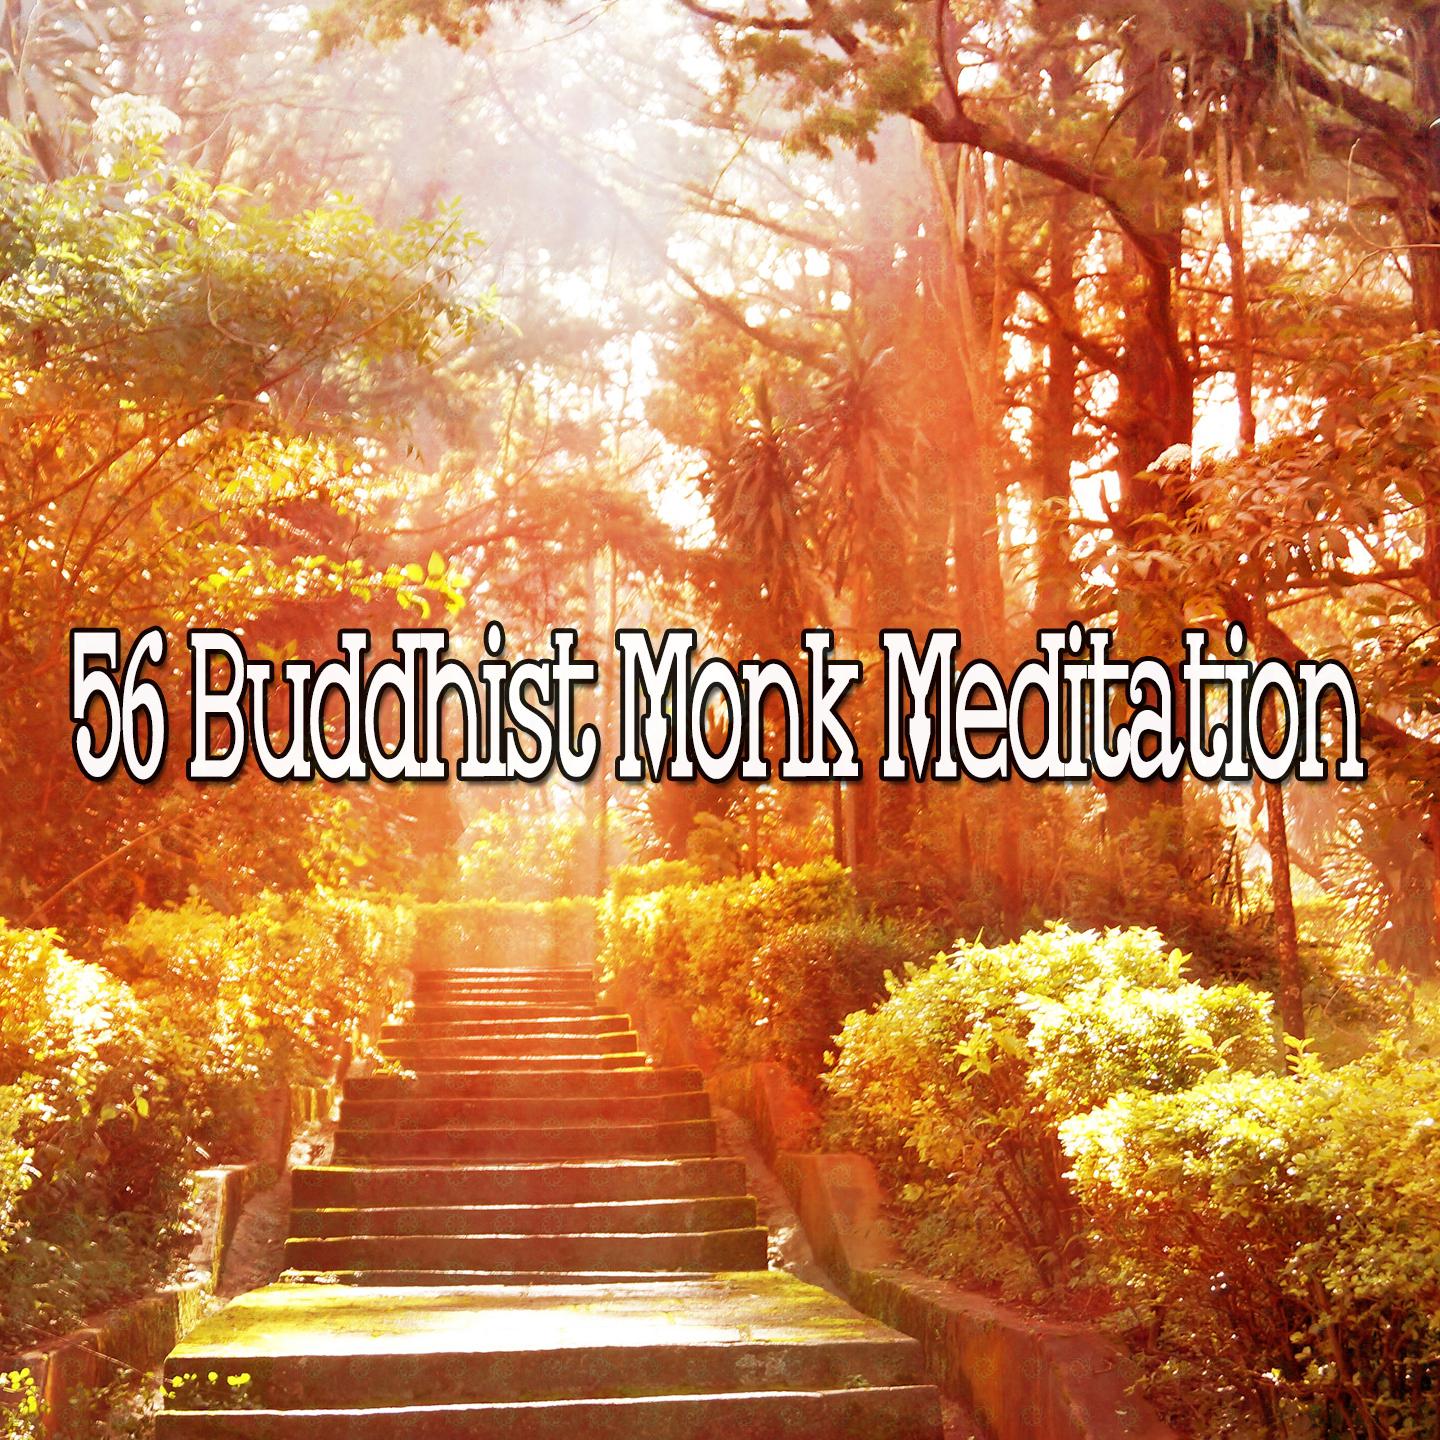 56 Buddhist Monk Meditation